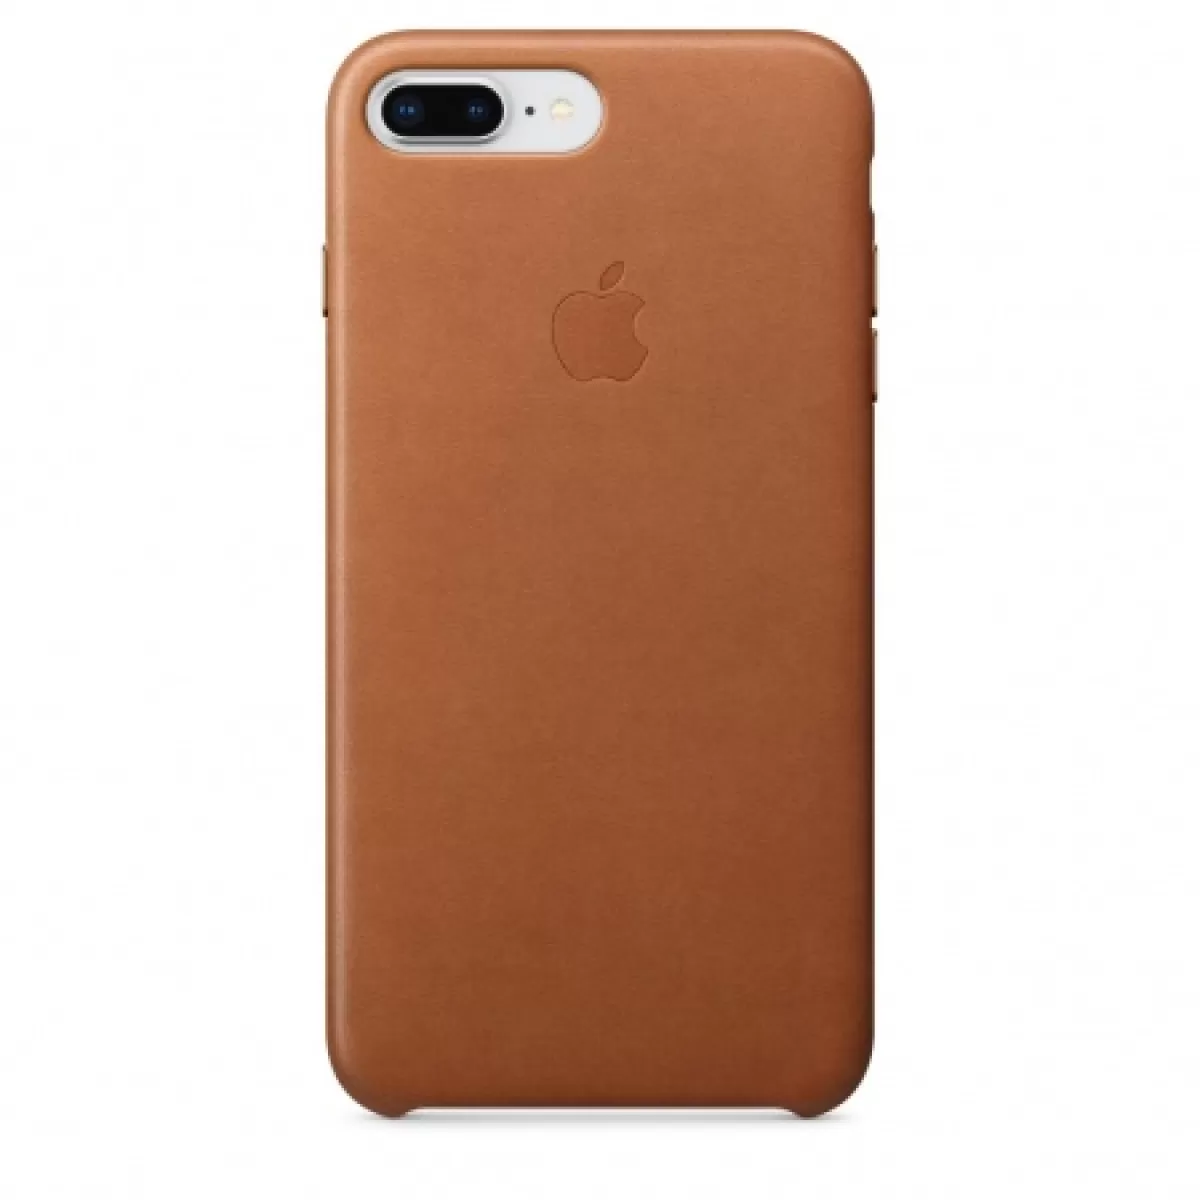 Apple iPhone 8 Plus/7 Plus Leather Case Saddle Brown